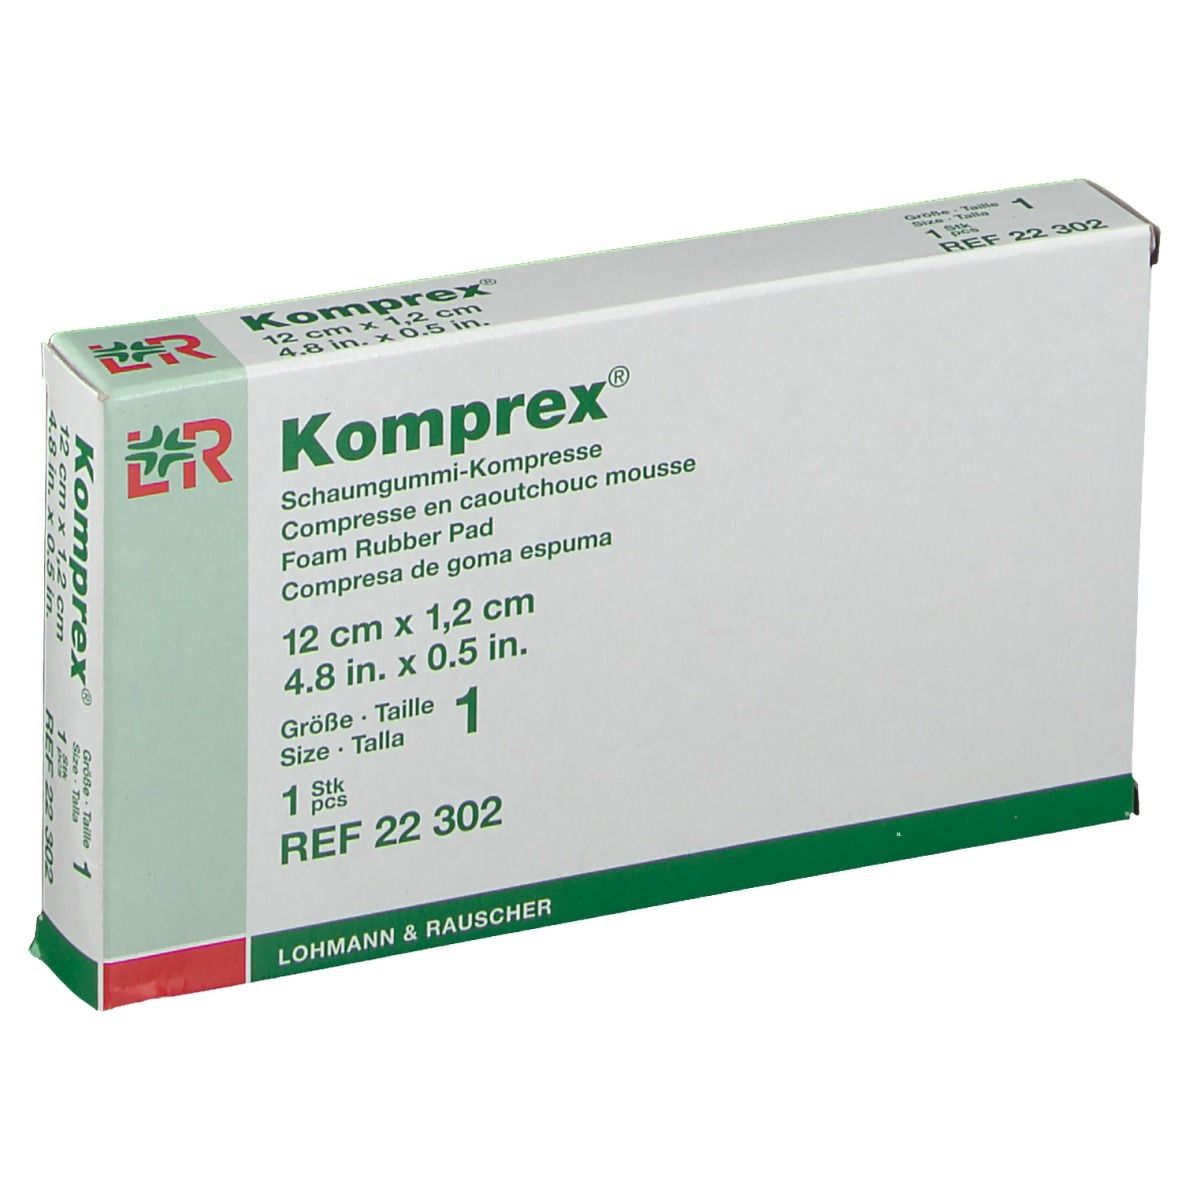 Komprex® Schaumgummikompresse Gr. 1 nierenförmig 1 St - SHOP APOTHEKE